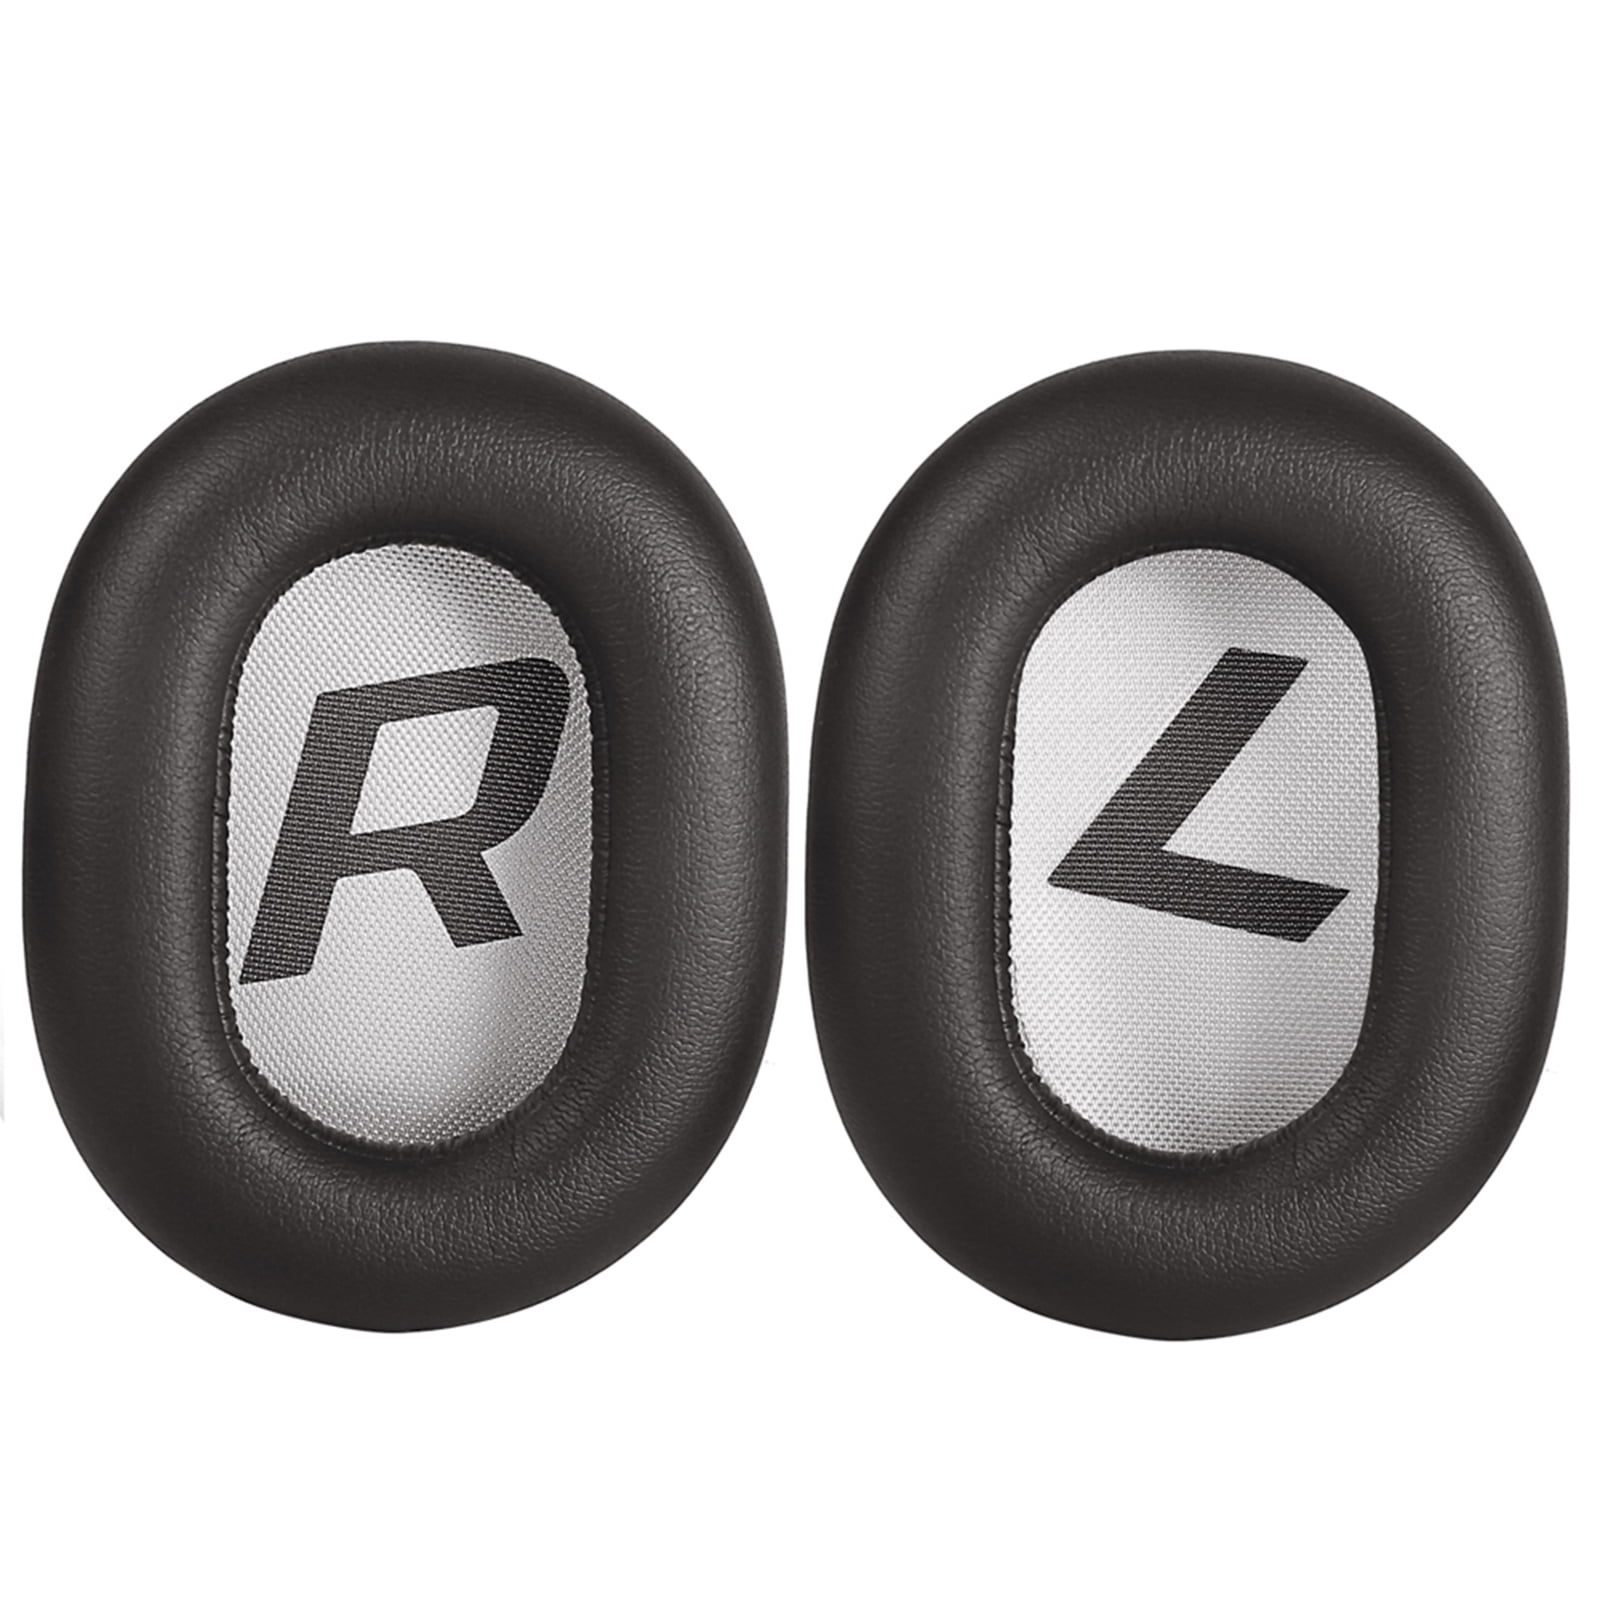 2Pcs Replacement Earpads Ear Pad Cushion for Plantronics BackBeat PRO 2 Over Ear Headphones